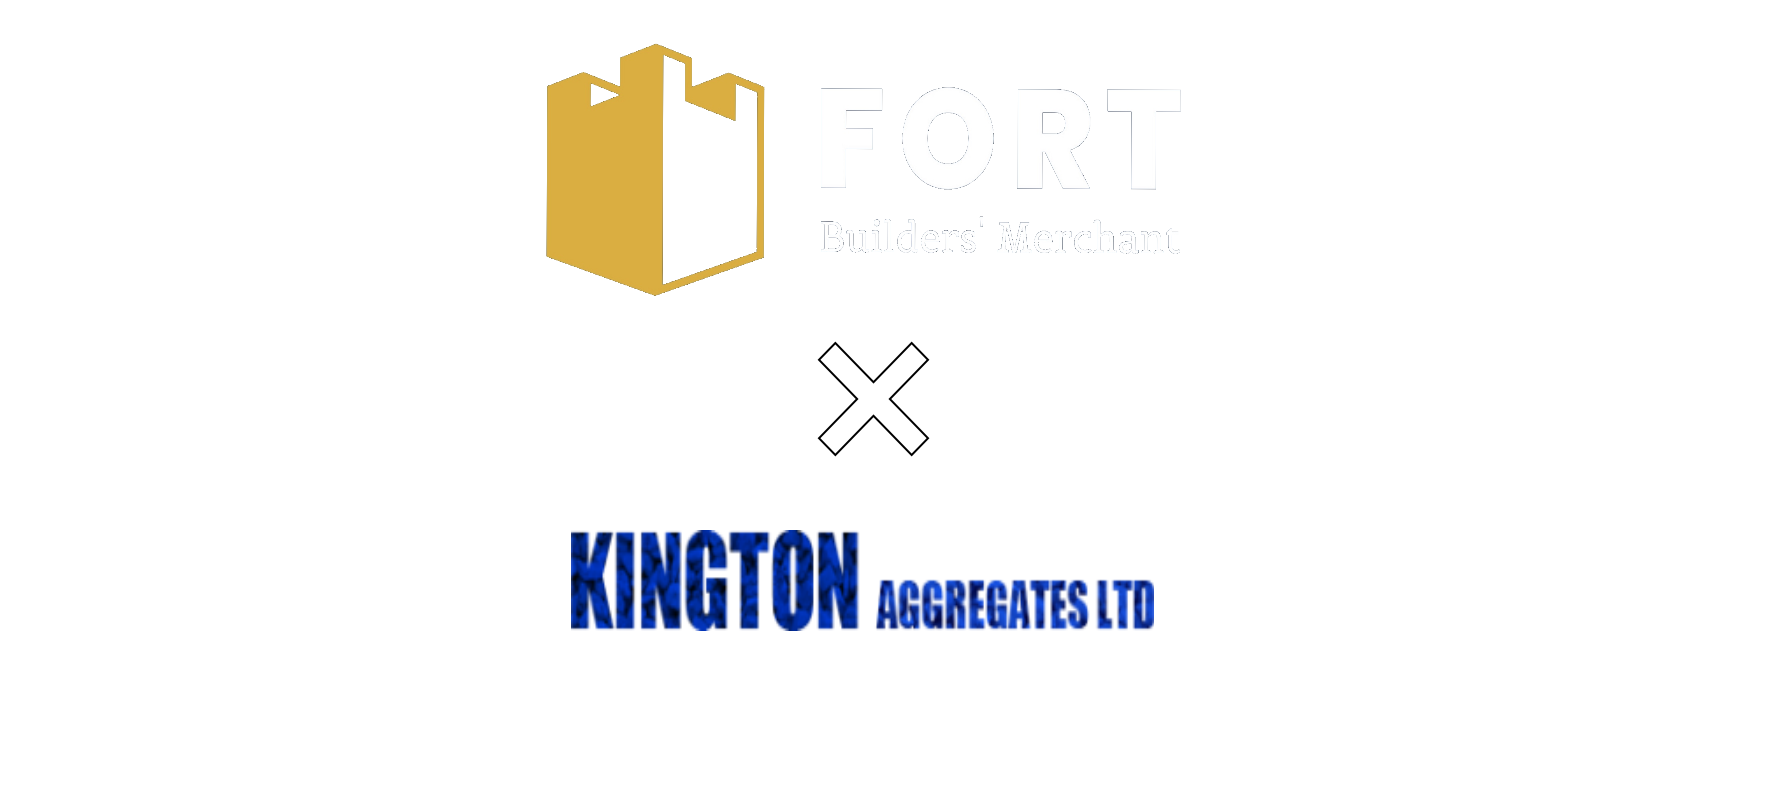 Fort X Kington